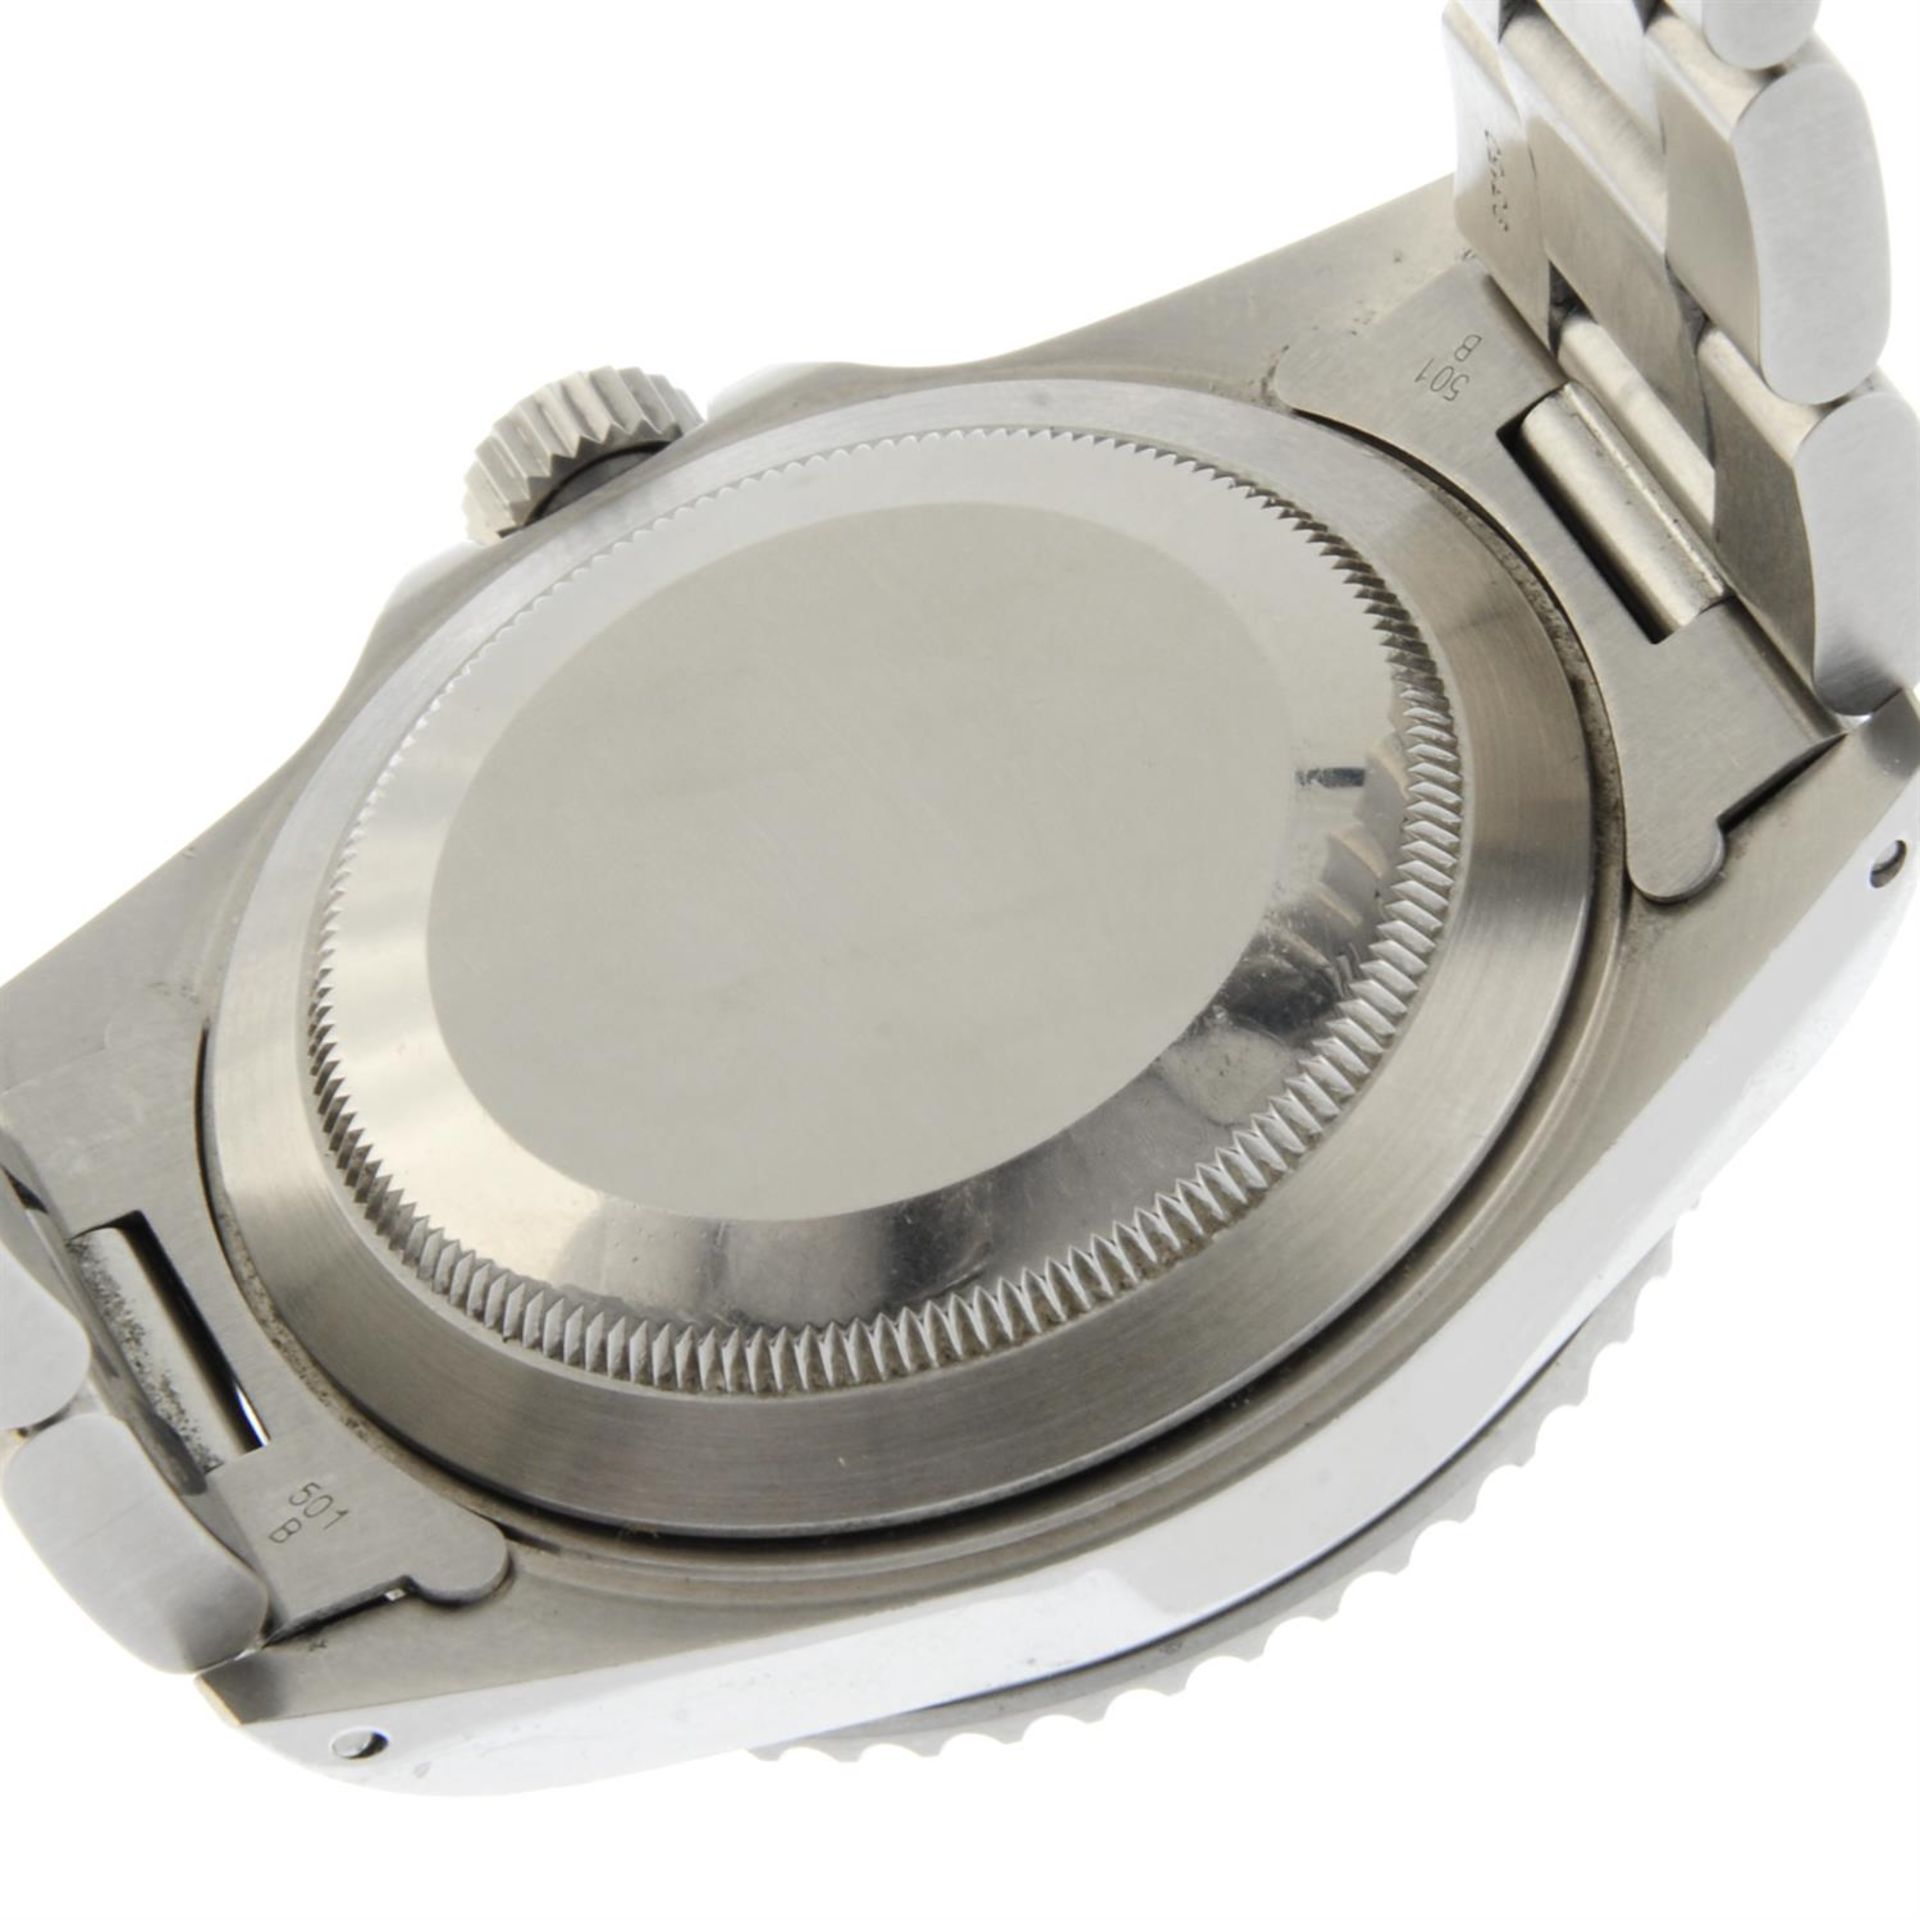 Rolex - an Oyster Perpetual Submariner watch, 39mm. - Bild 5 aus 6